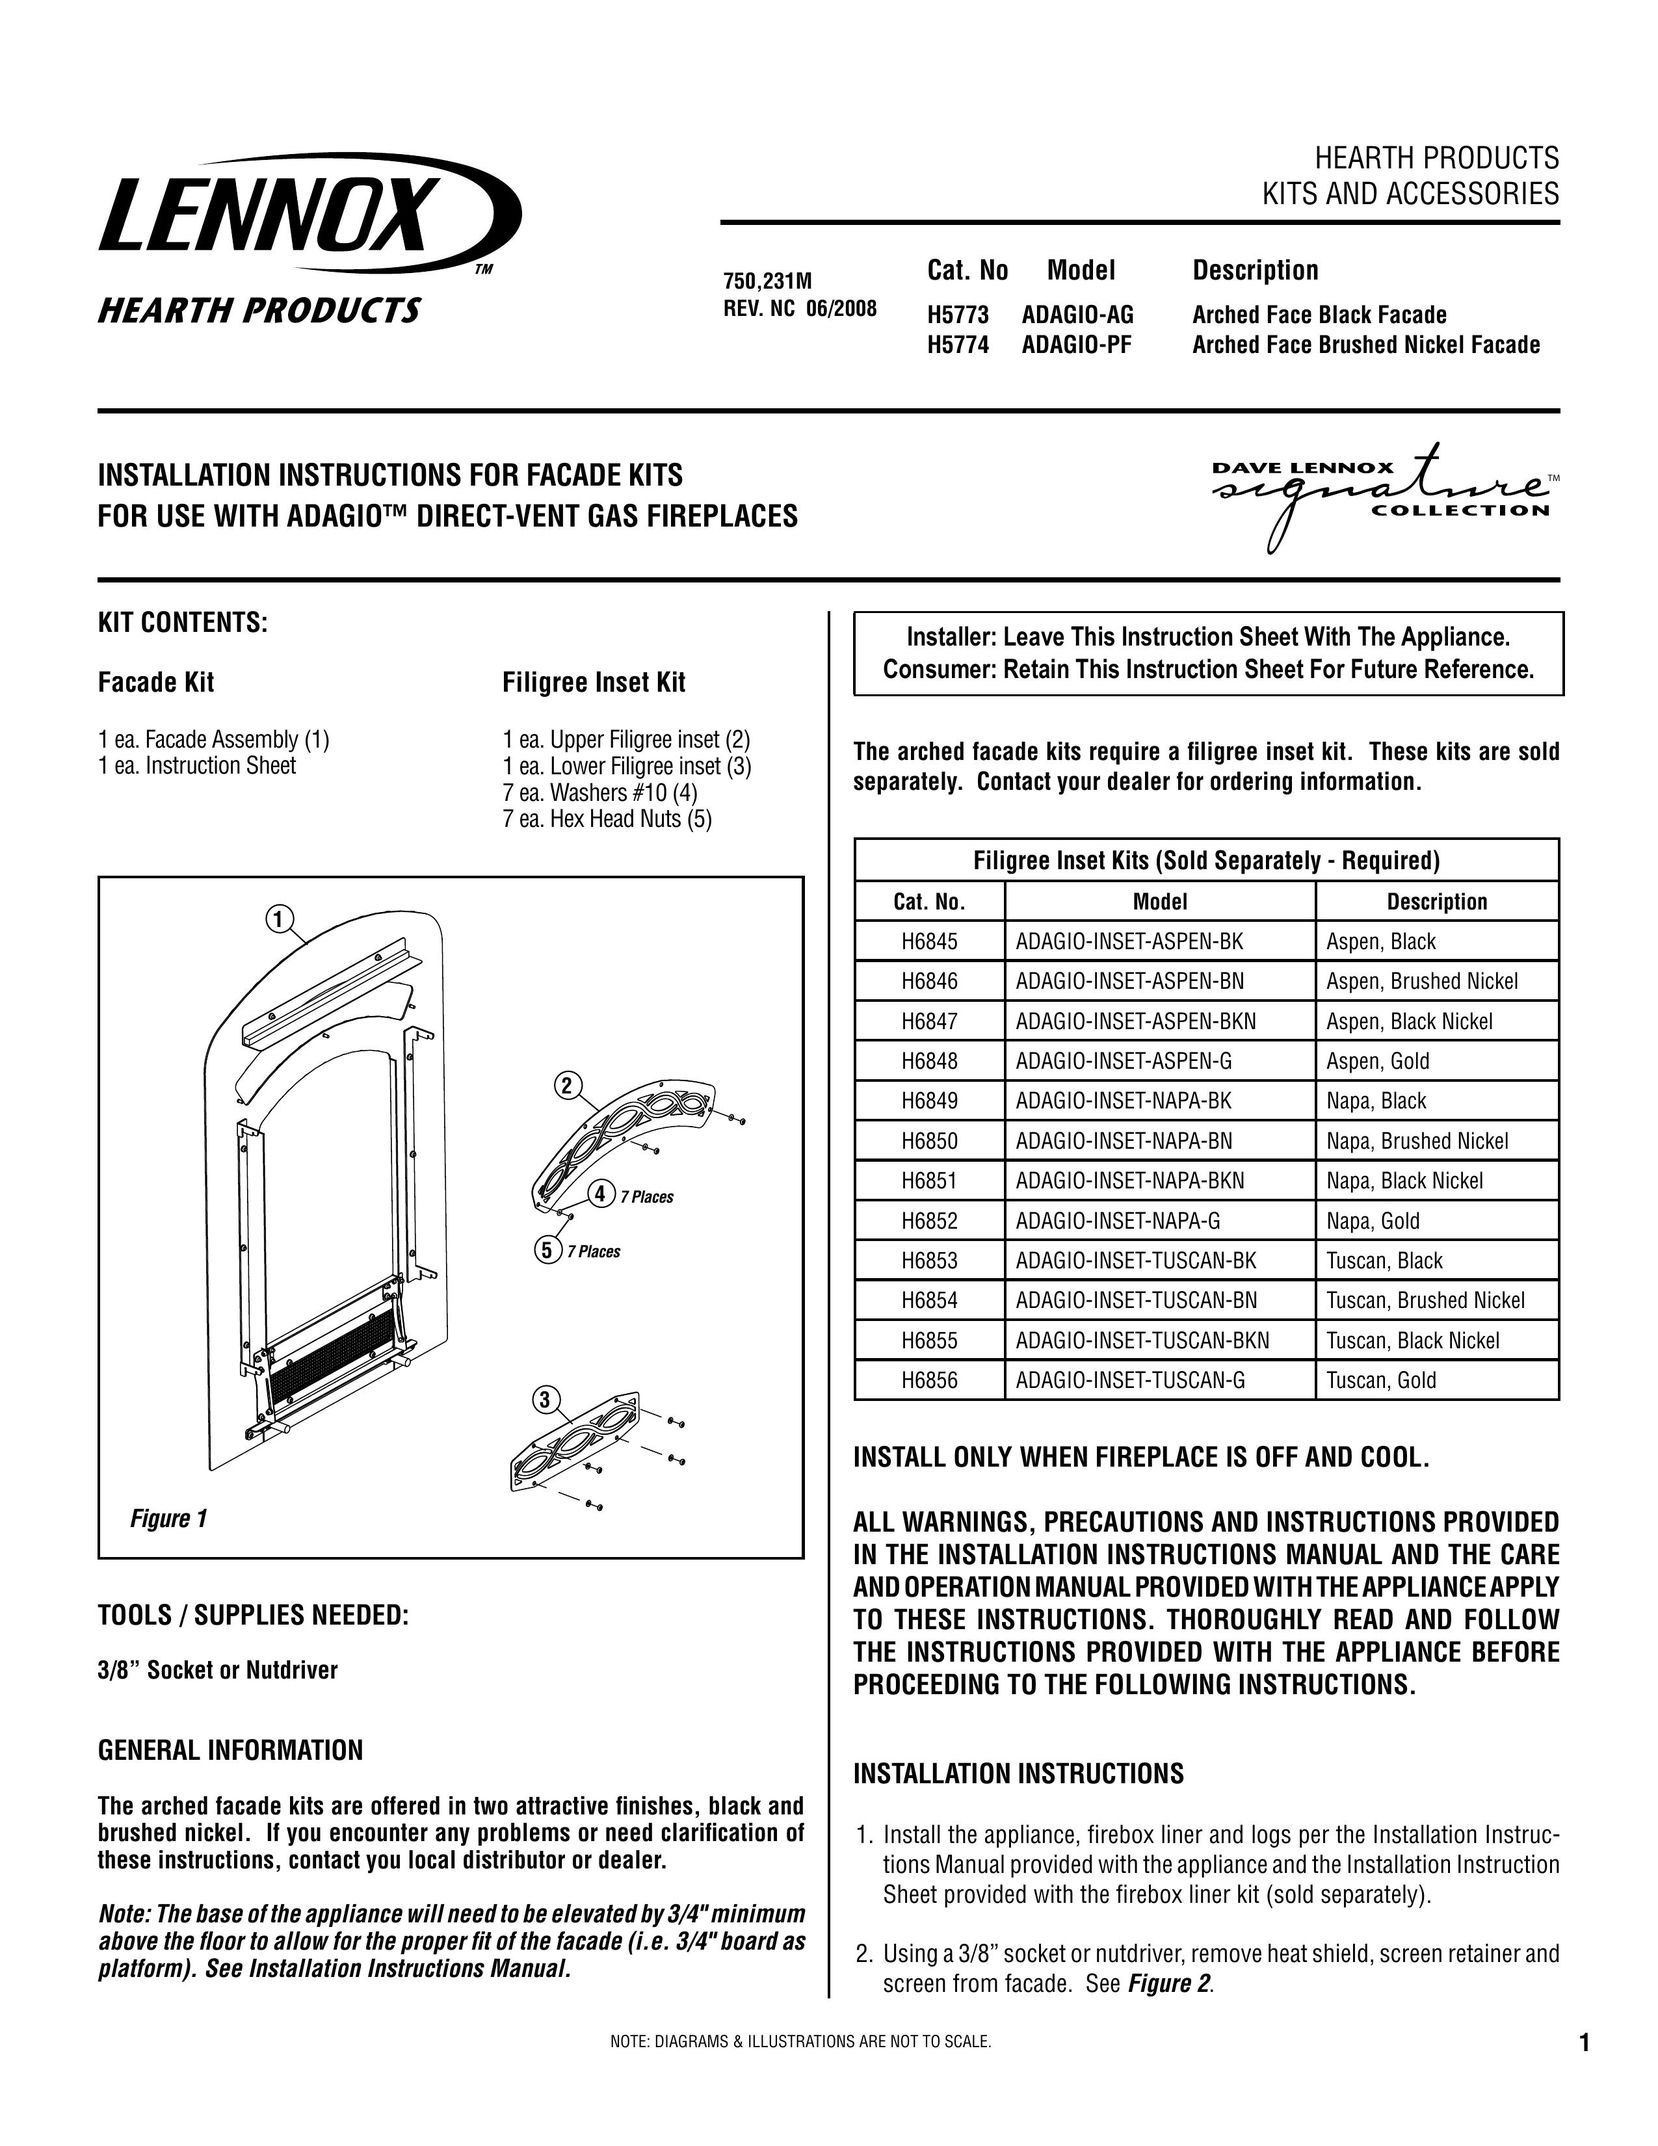 Lennox Hearth ADAGIO-pF Indoor Fireplace User Manual